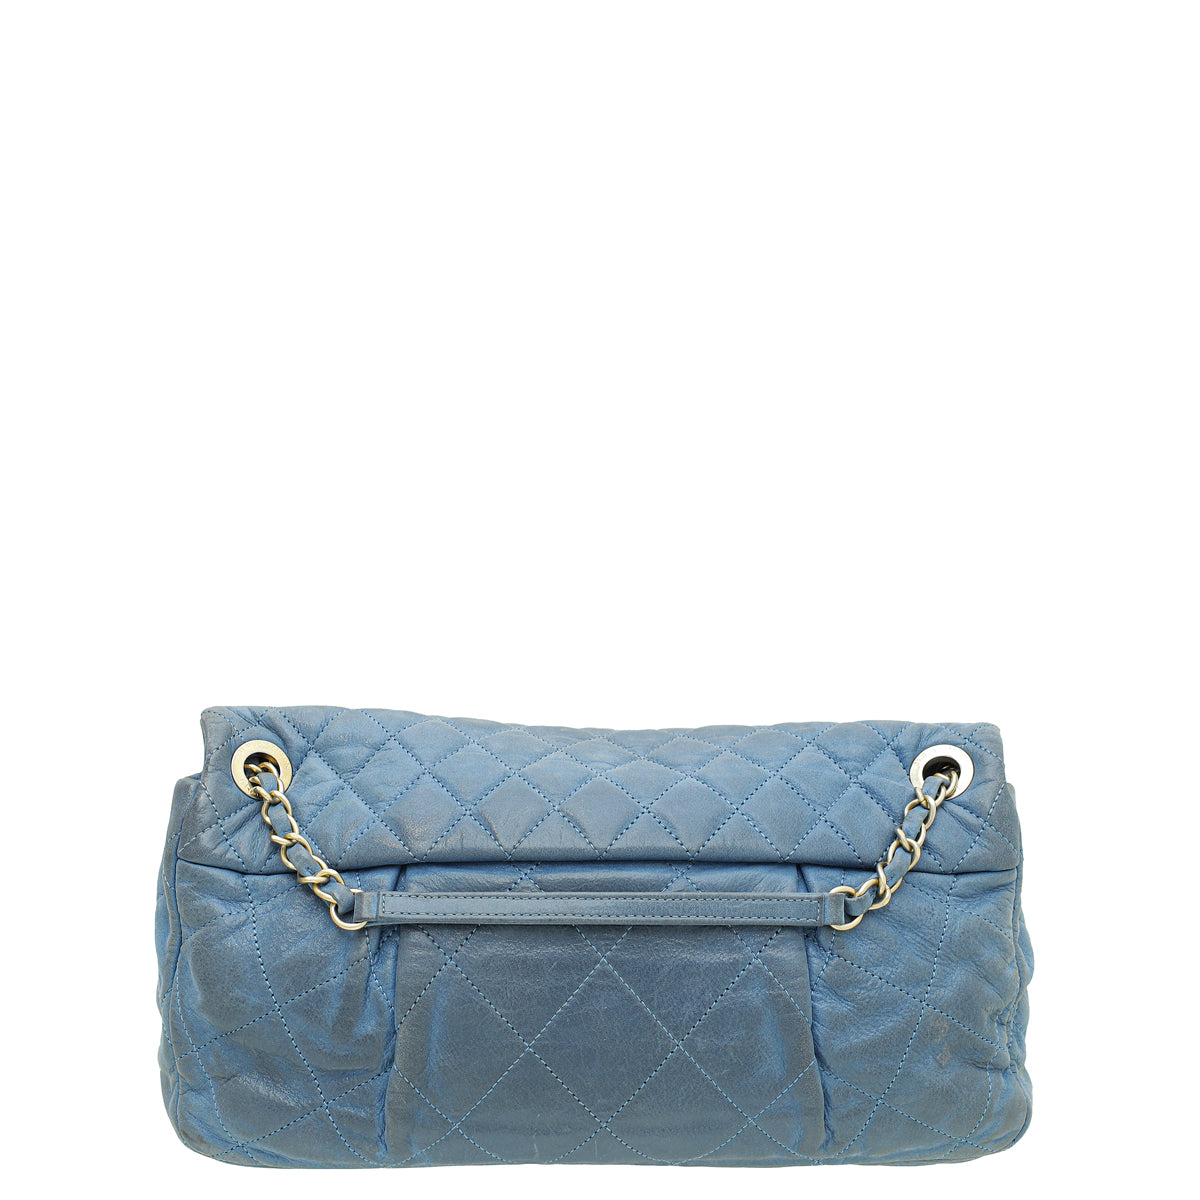 Chanel Blue CC Soft Flap Bag